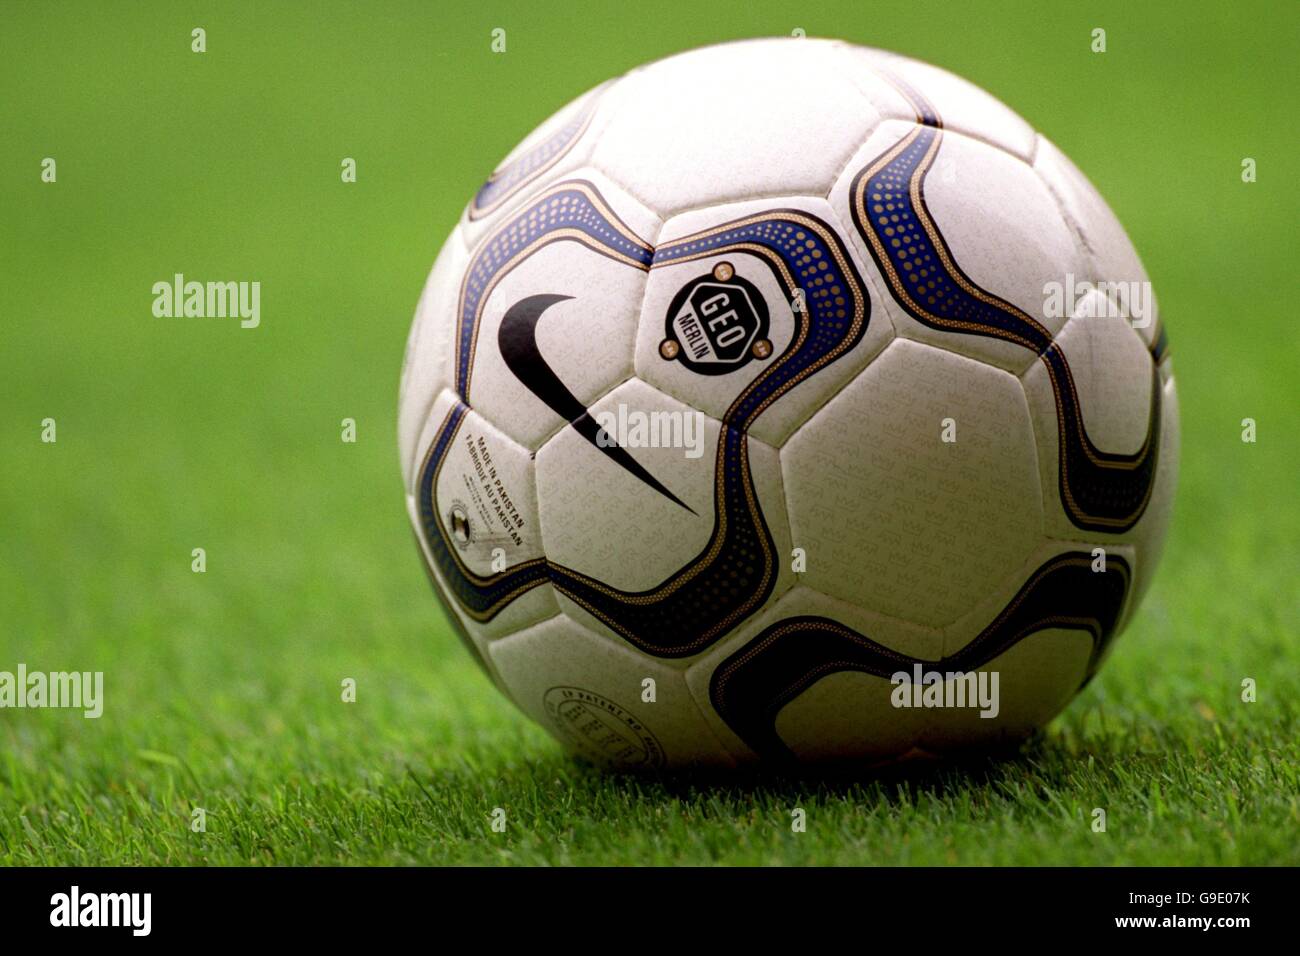 Football - FA Carling Premiership - Manchester United / Sunderland. Le nouveau Nike Geo football Banque D'Images